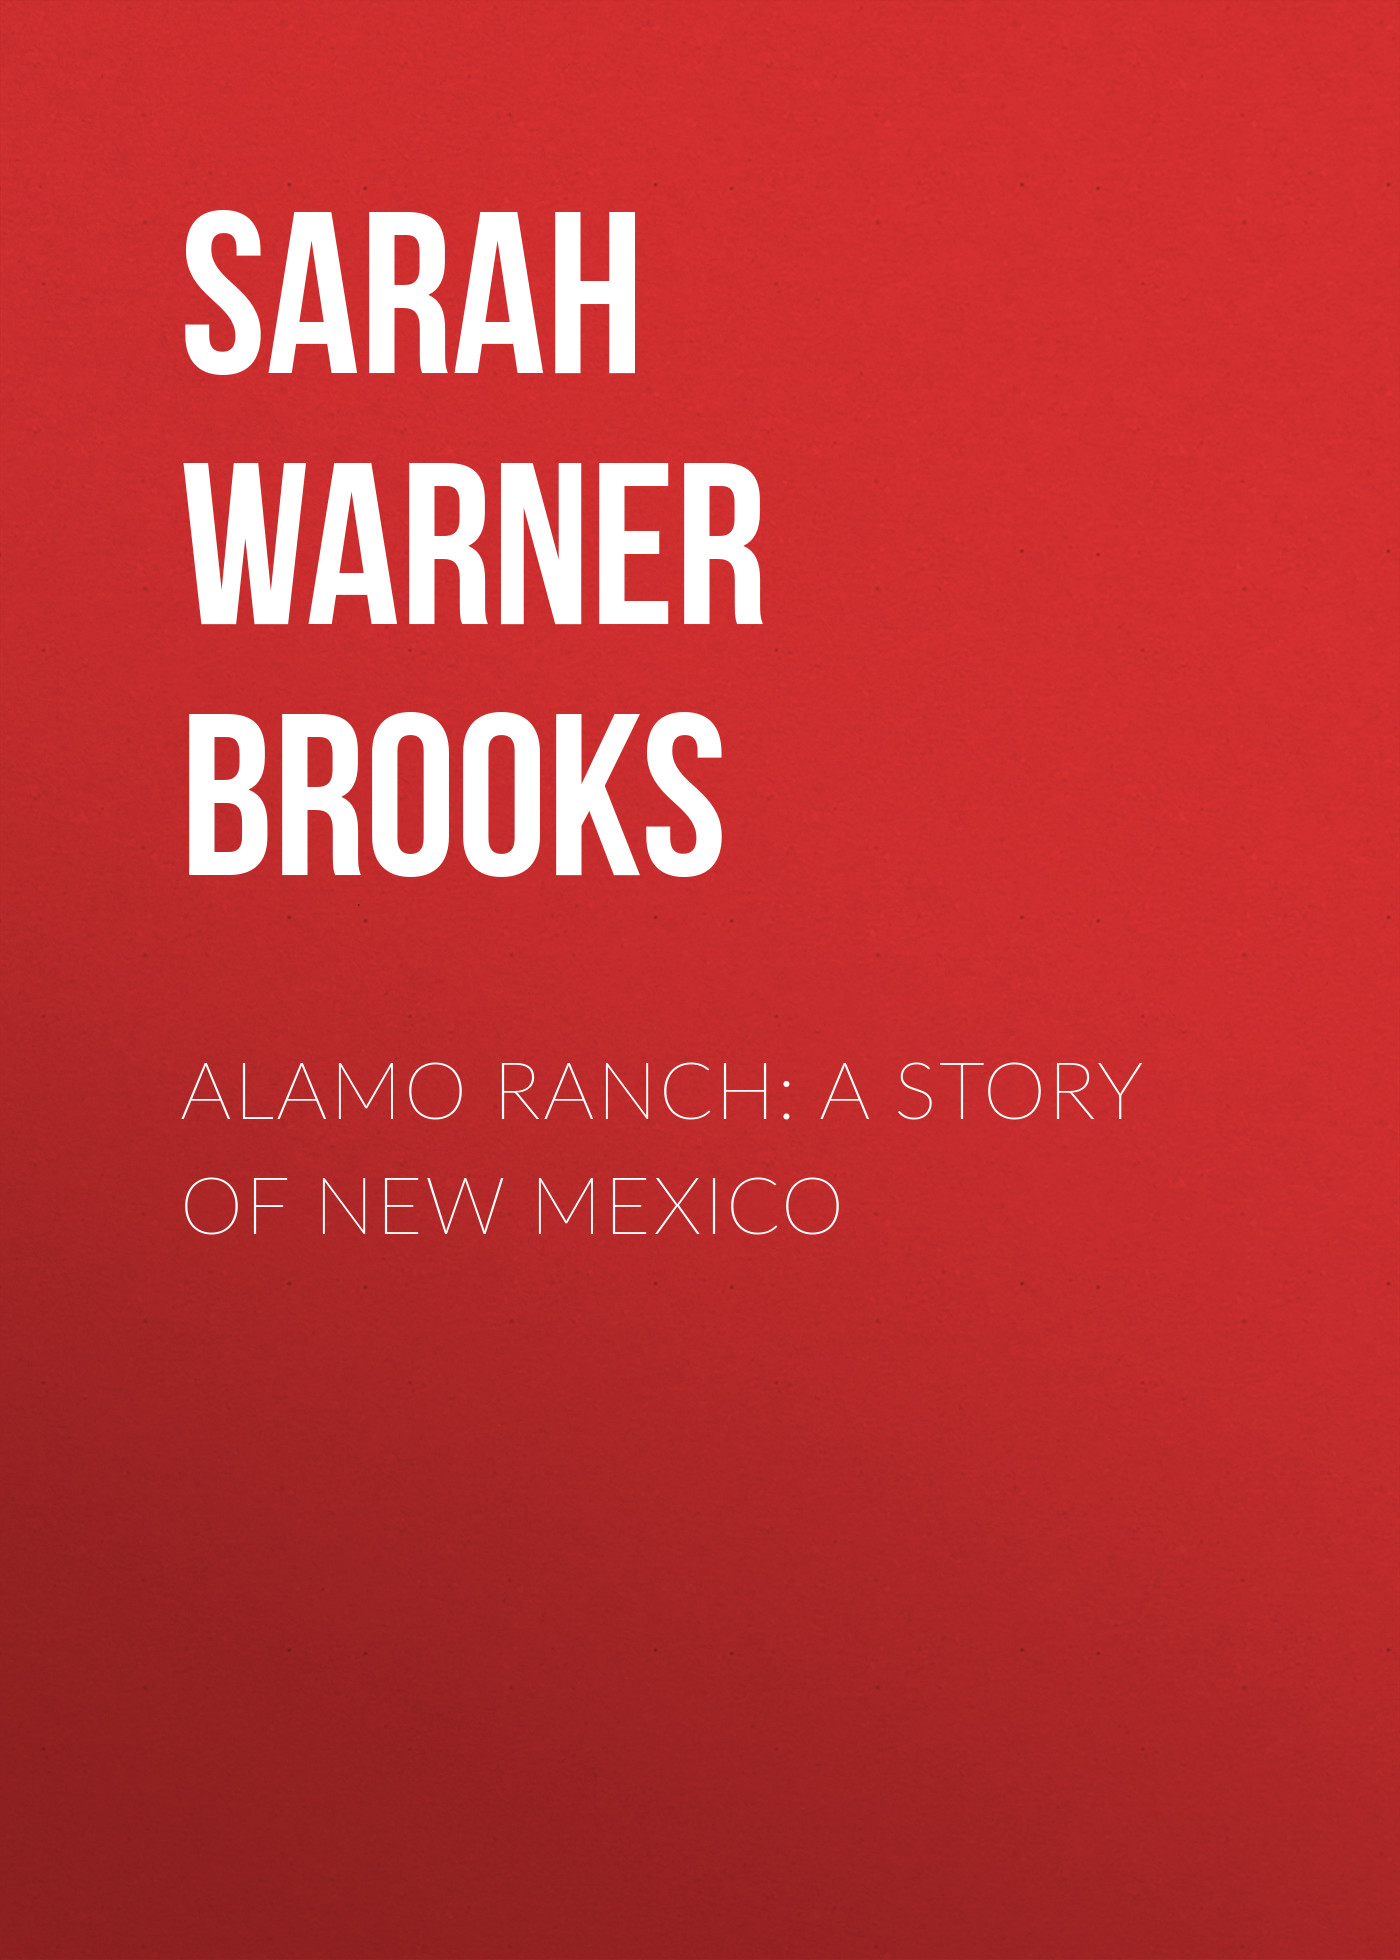 Alamo Ranch: A Story of New Mexico